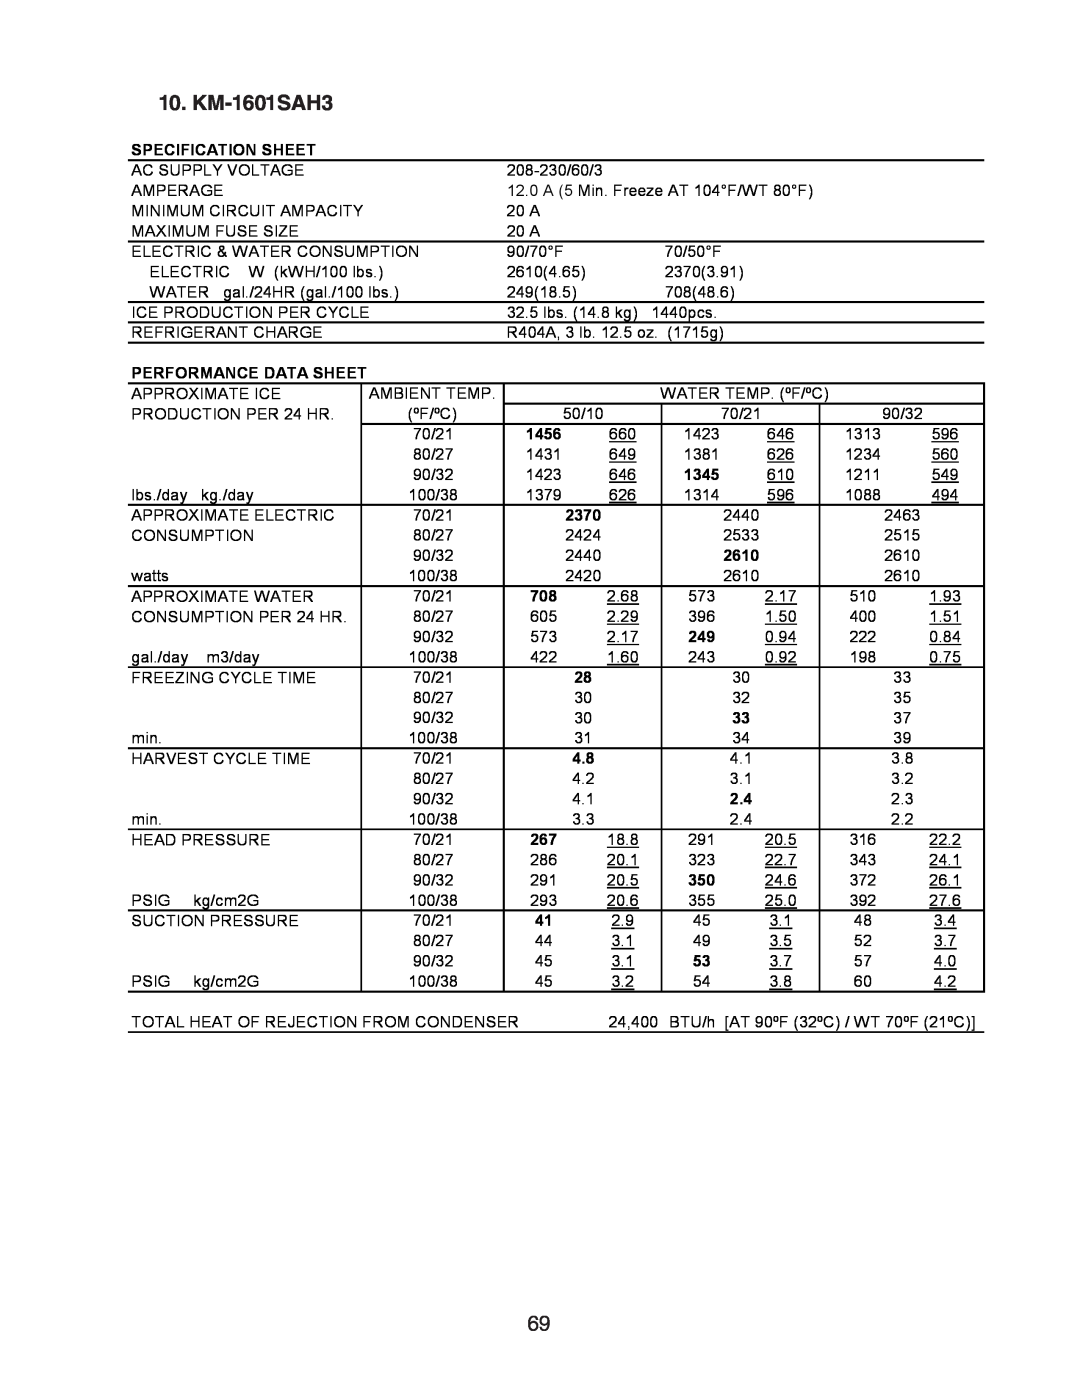 Hoshizaki SRH3 KMH-2000SWH/3, SRH/3 KM-2100SWH3 KM-1601SAH3, Specification Sheet, Performance Data Sheet, 1456, 2610 